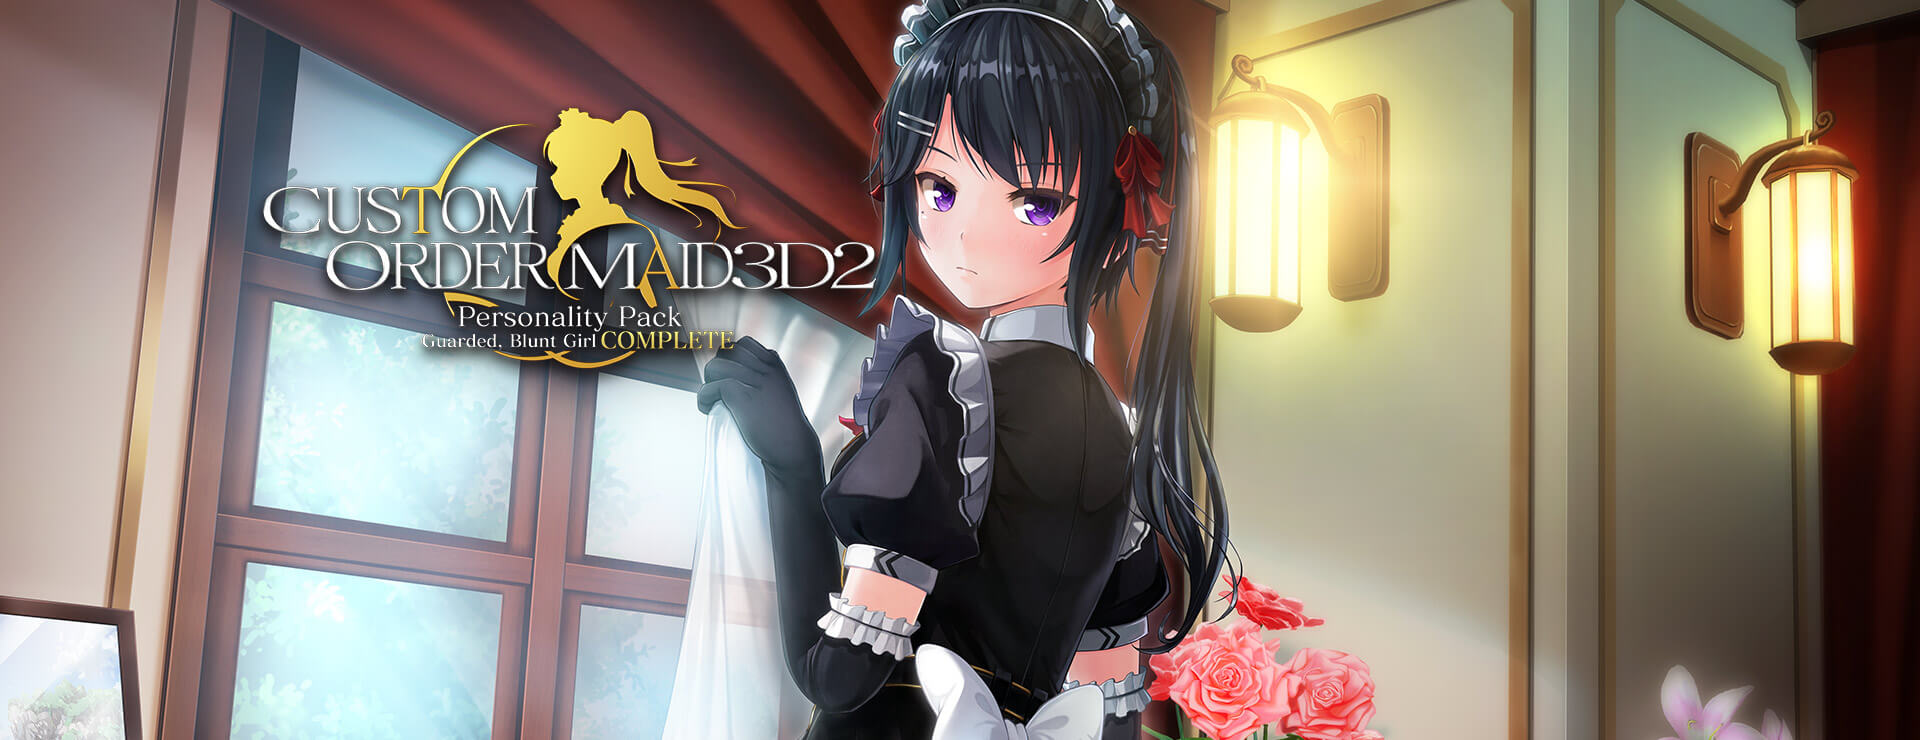 Custom Order Maid 3D2 Guarded, Blunt Girl Complete Bundle - 仿真游戏 遊戲